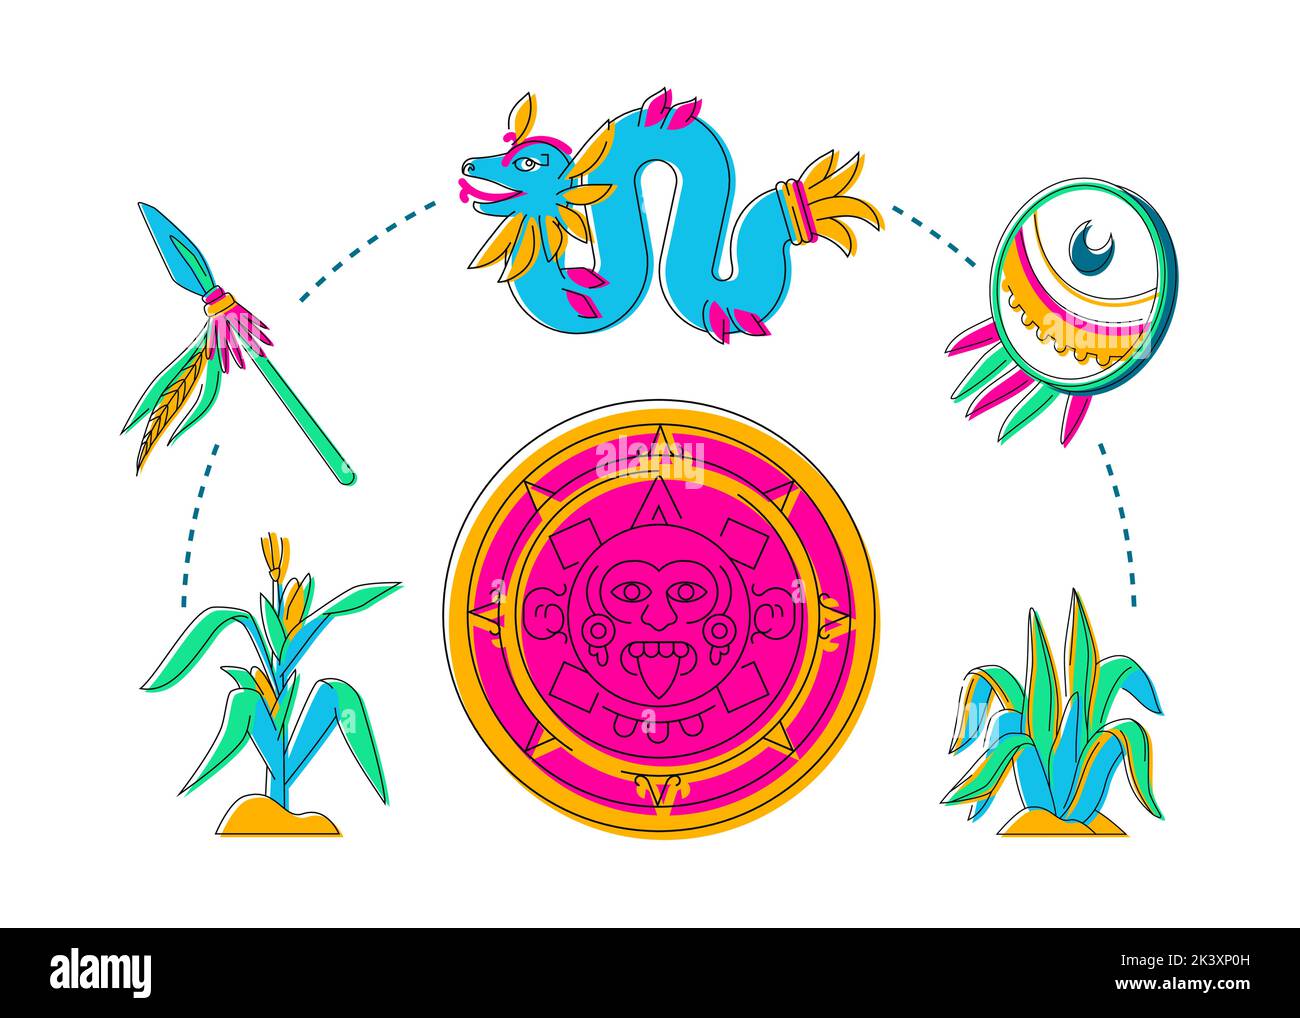 Mayan historical artifacts - flat design style illustration Stock Vector